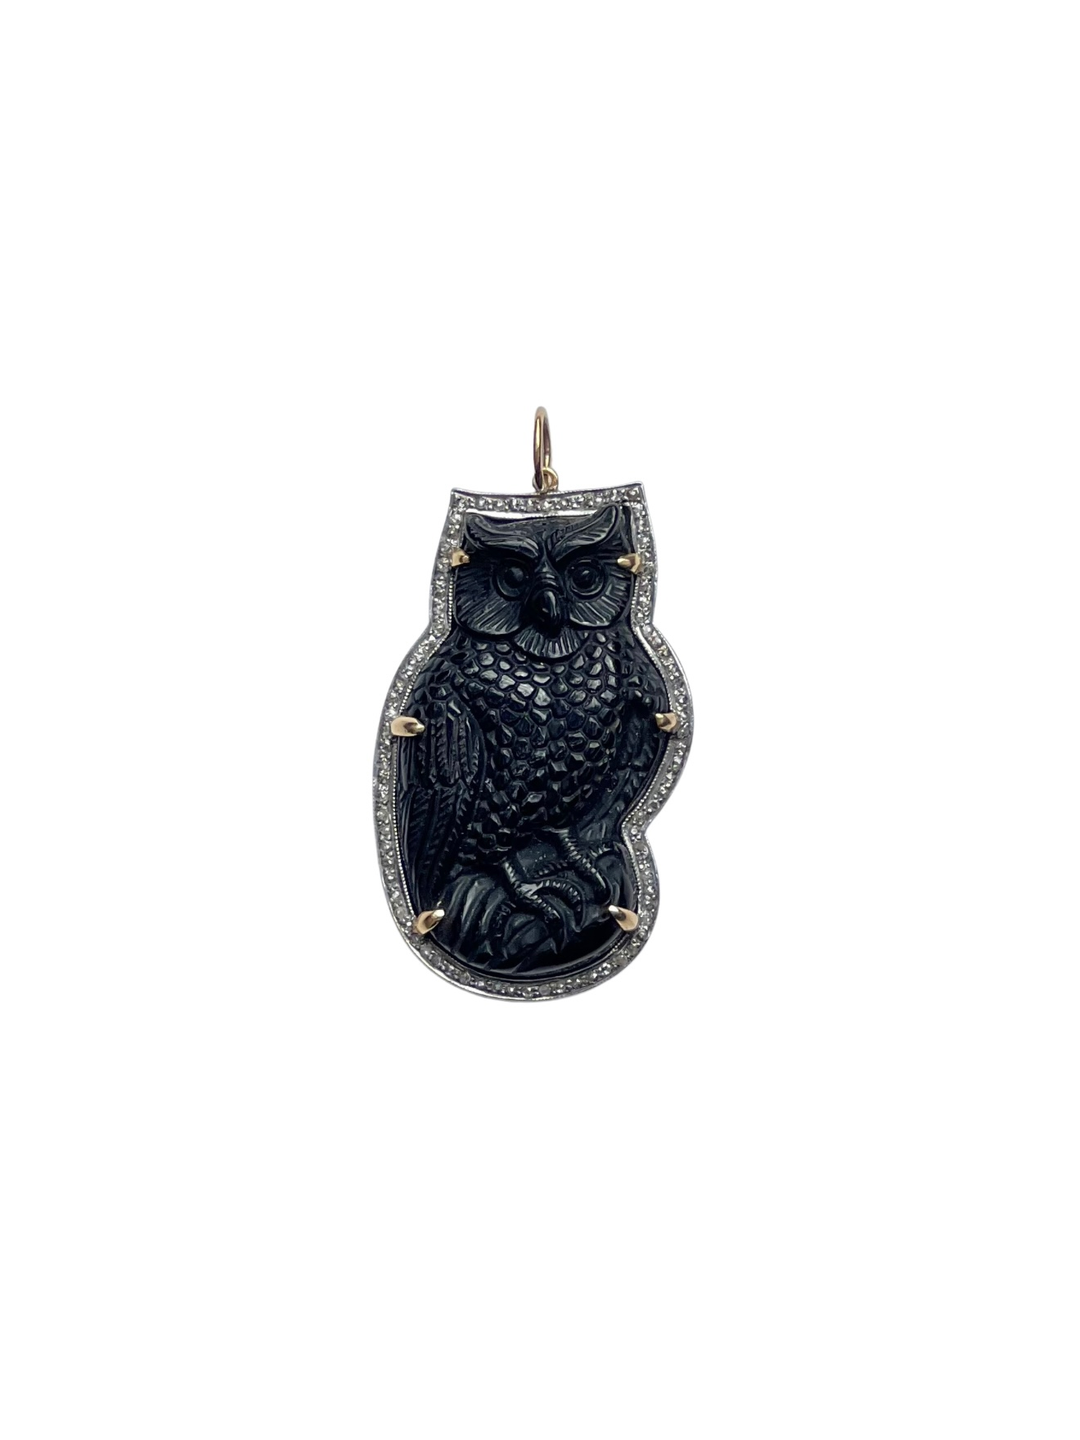 The Woods Fine Jewelry Black Onyx Owl Pendant